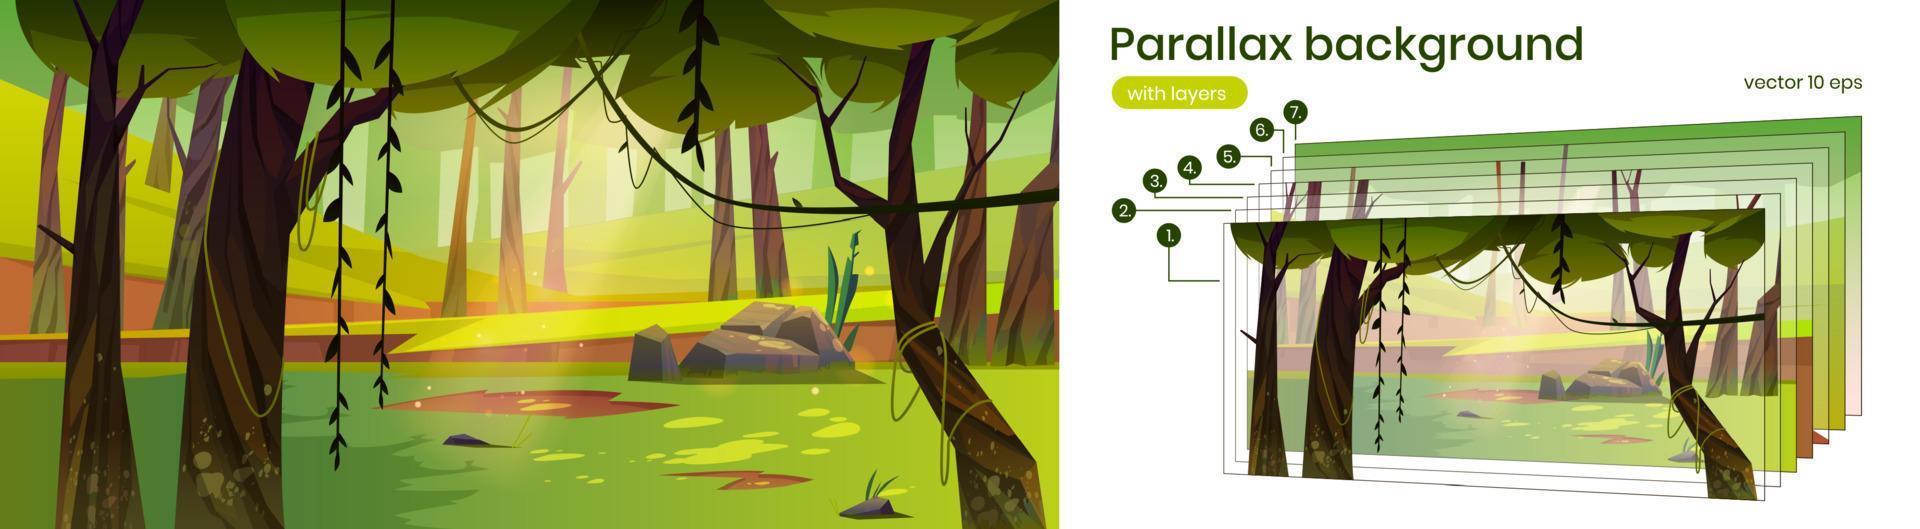 Parallax background cartoon forest 2d landscape vector